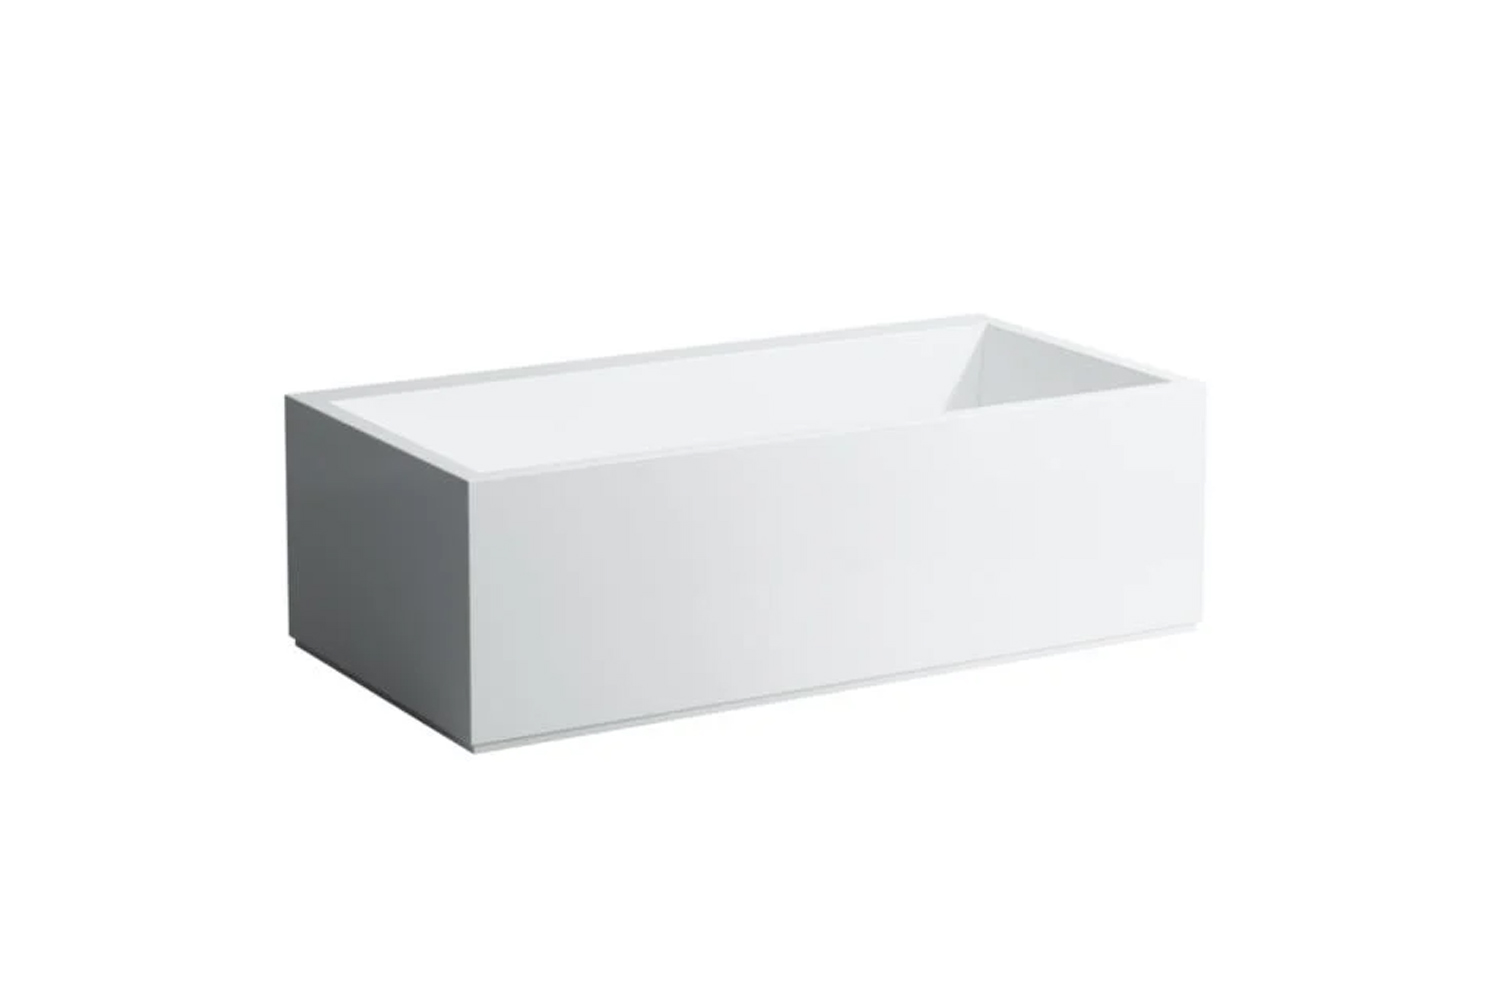 the laufen kartell freestanding bathtub is \$7,6\18.40 at decor planet. 18